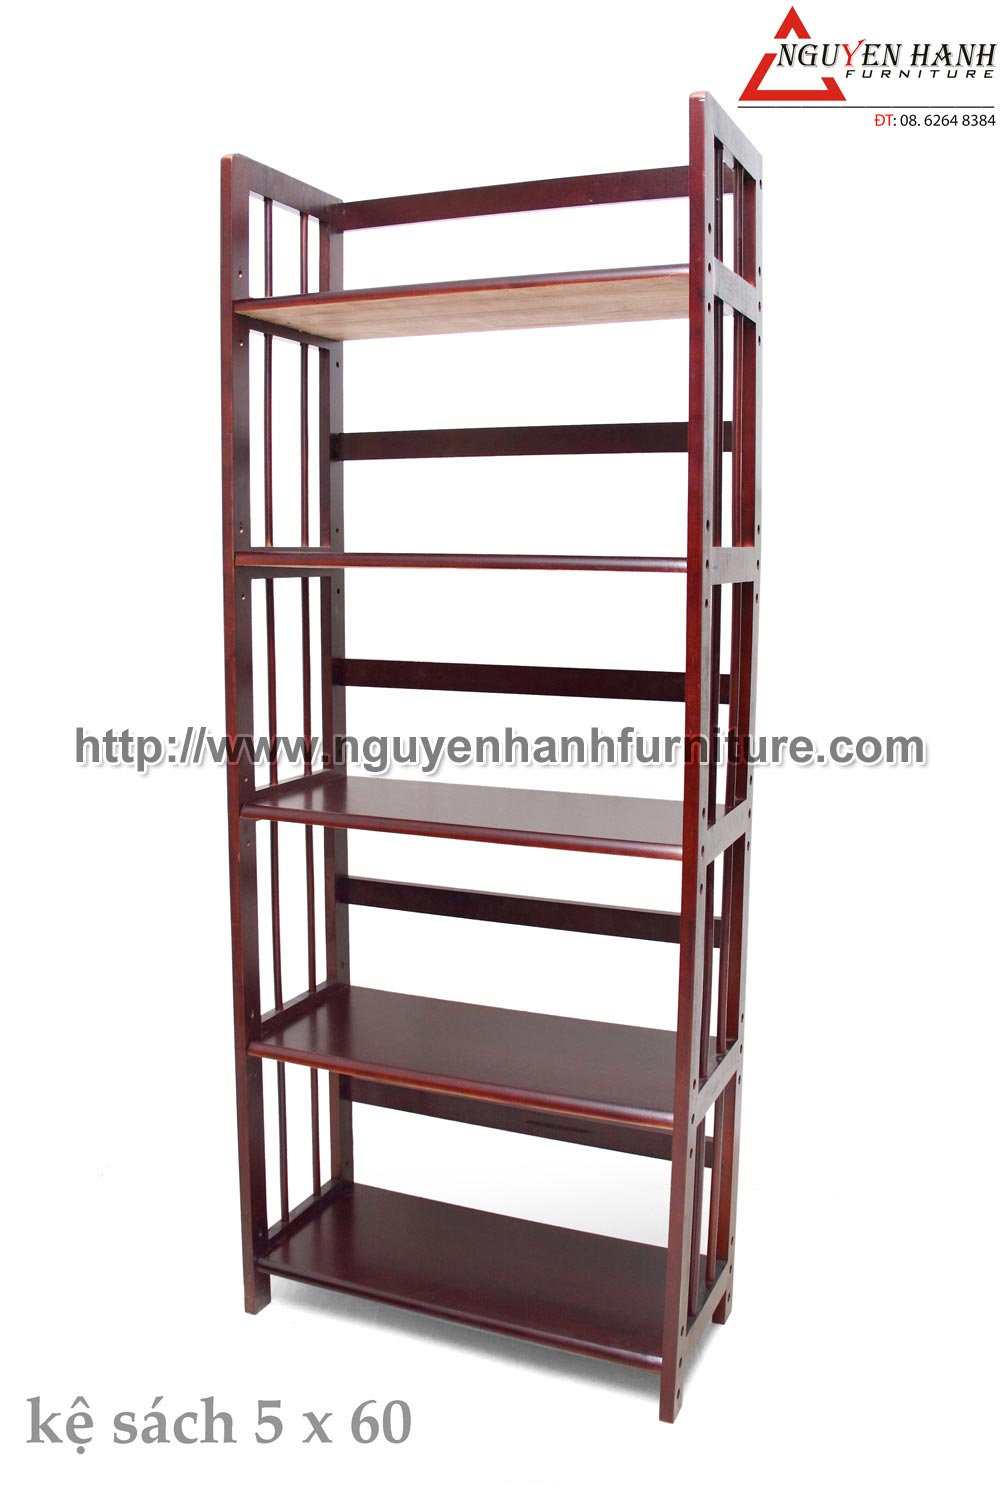 Name product: 5 storey Adjustable Bookshelf 60 